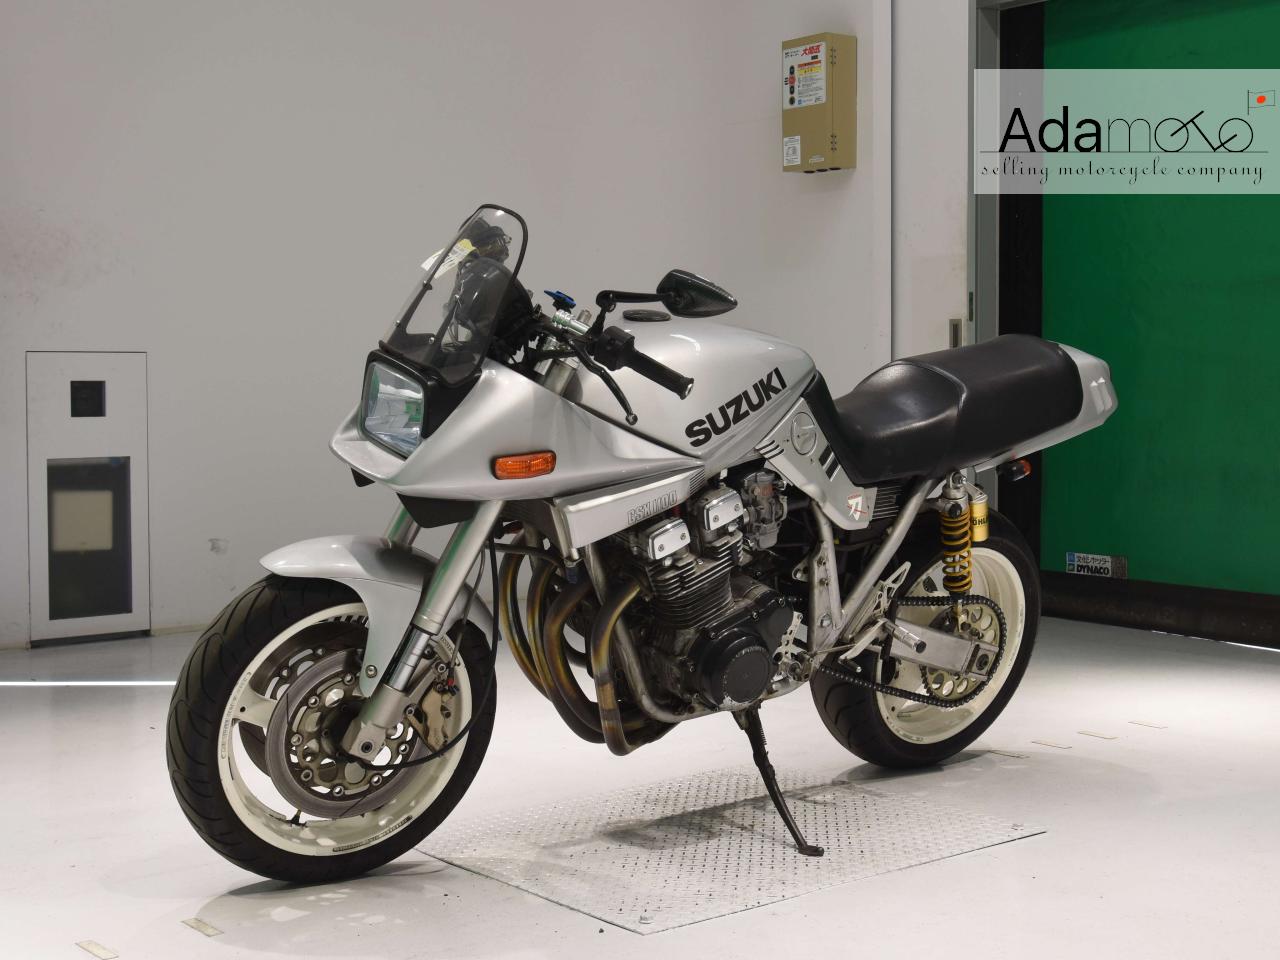 Suzuki GSX1100S KATANA - Adamoto - Motorcycles from Japan